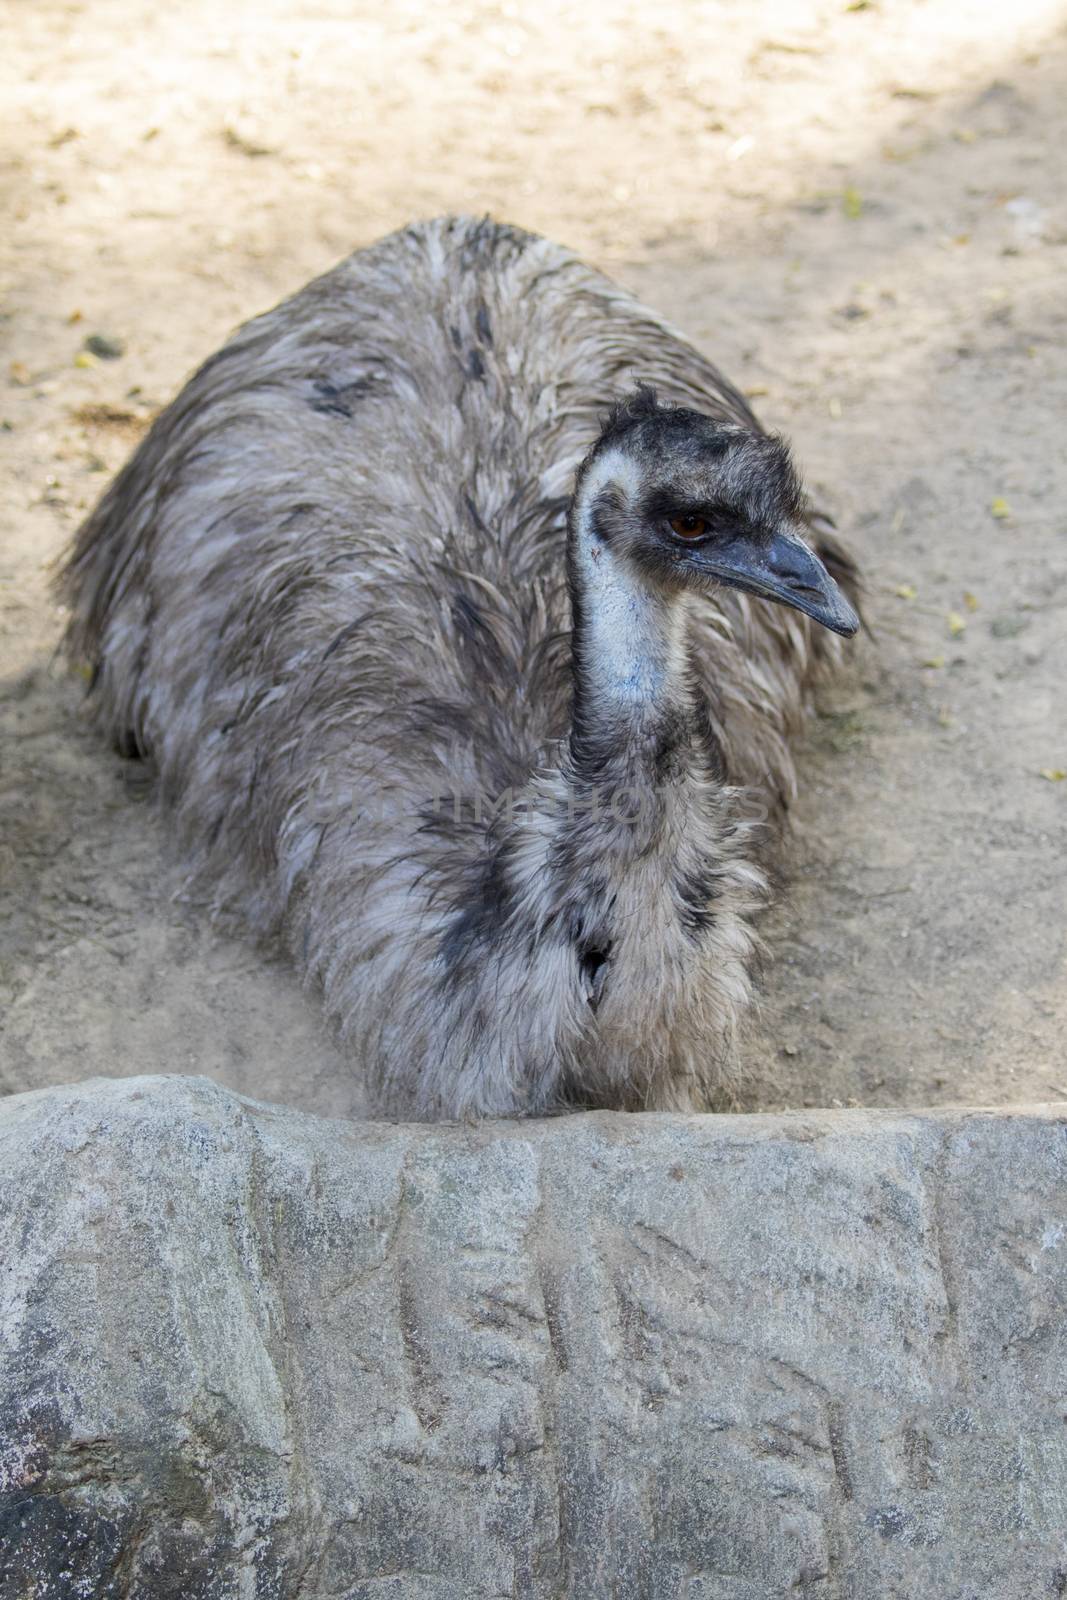 Image of a emu on the ground in thailand. Wild Animals.